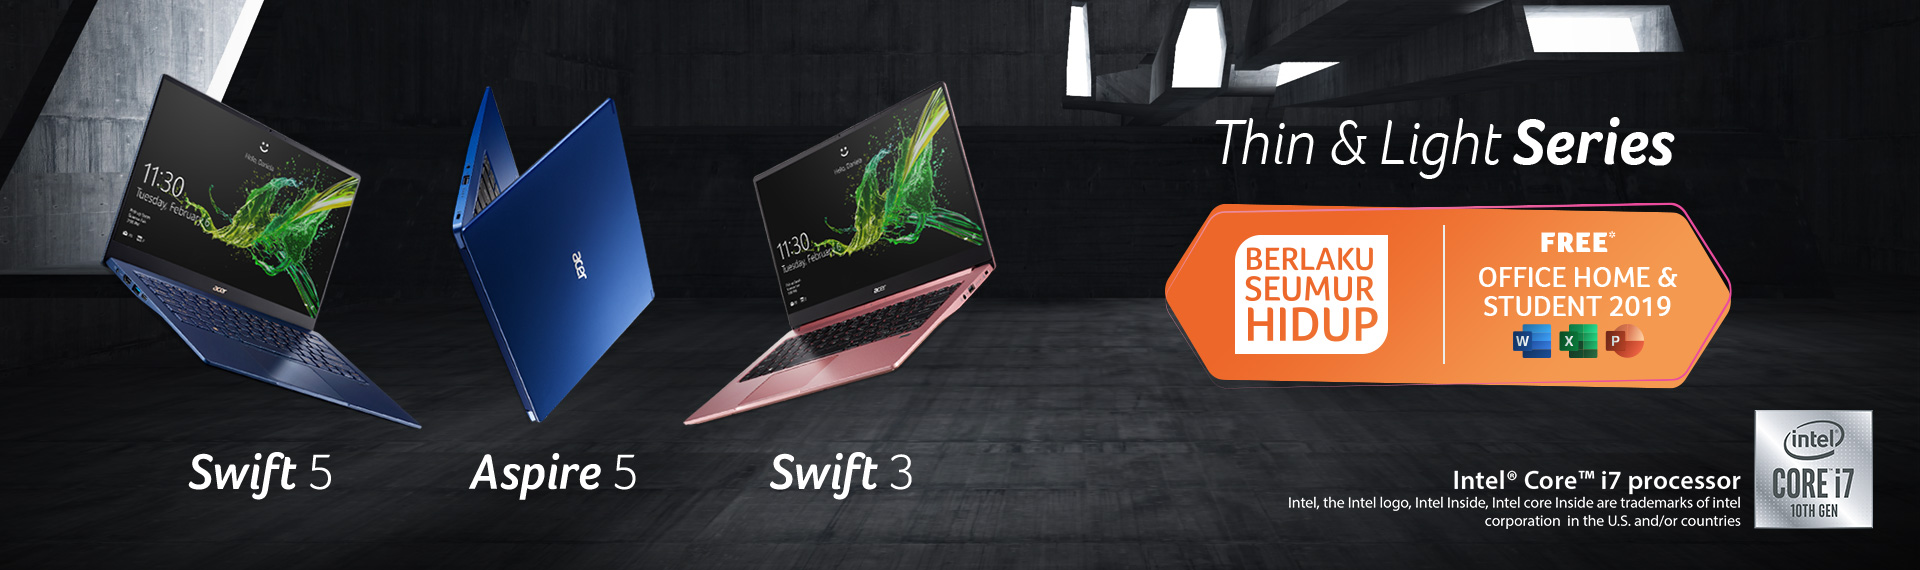 Swift 3, Swift 5, dan Aspire 5, Laptop Tipis Bertenaga Intel 10th Gen